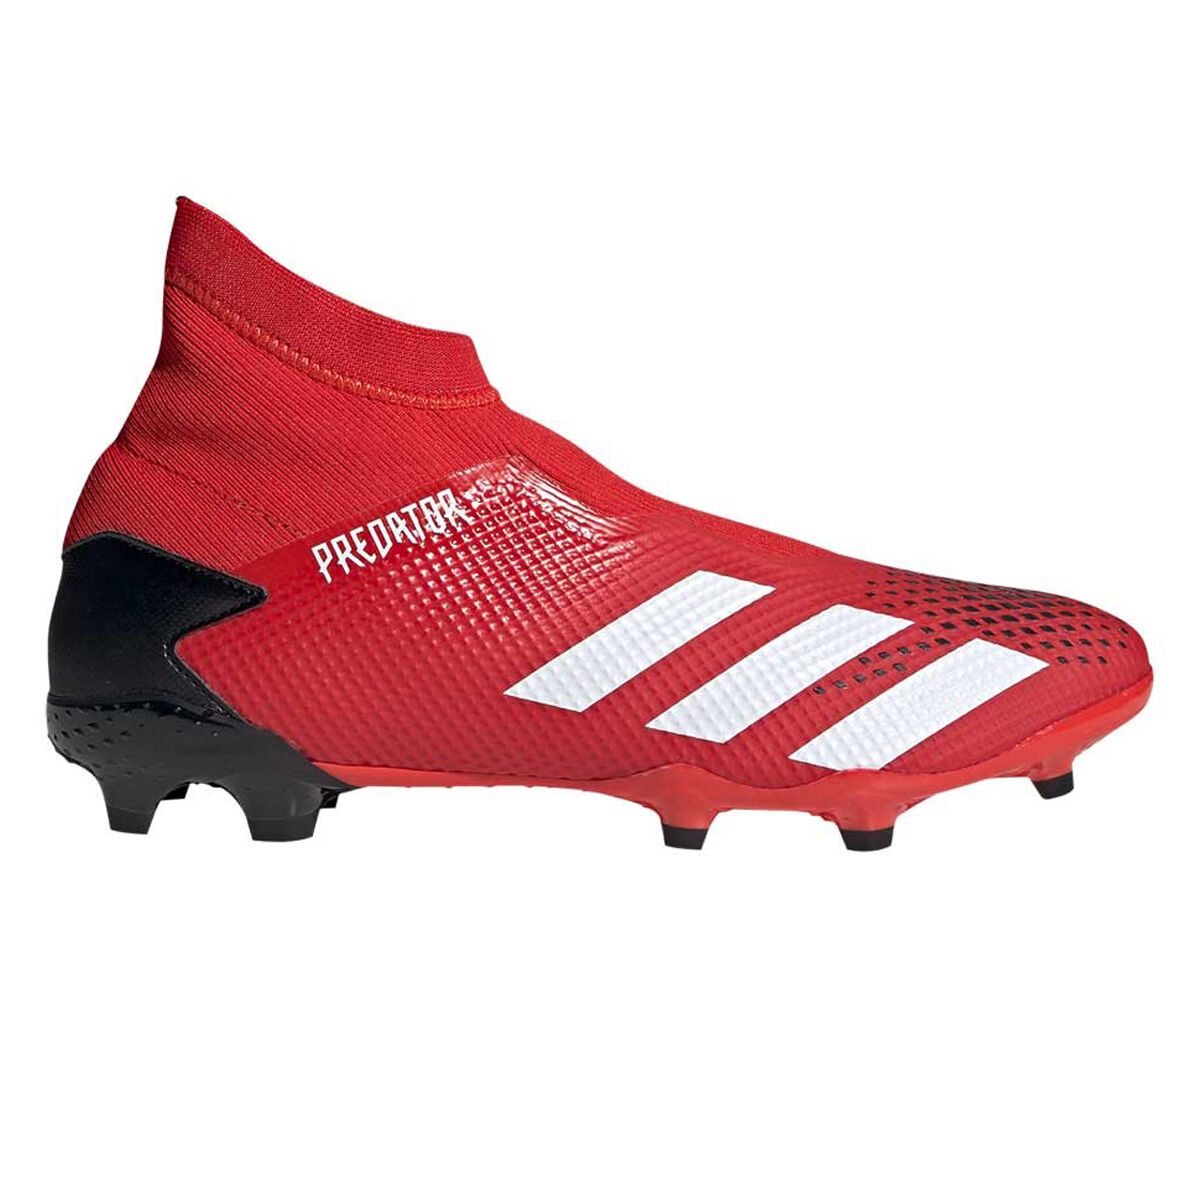 predator football boots no laces